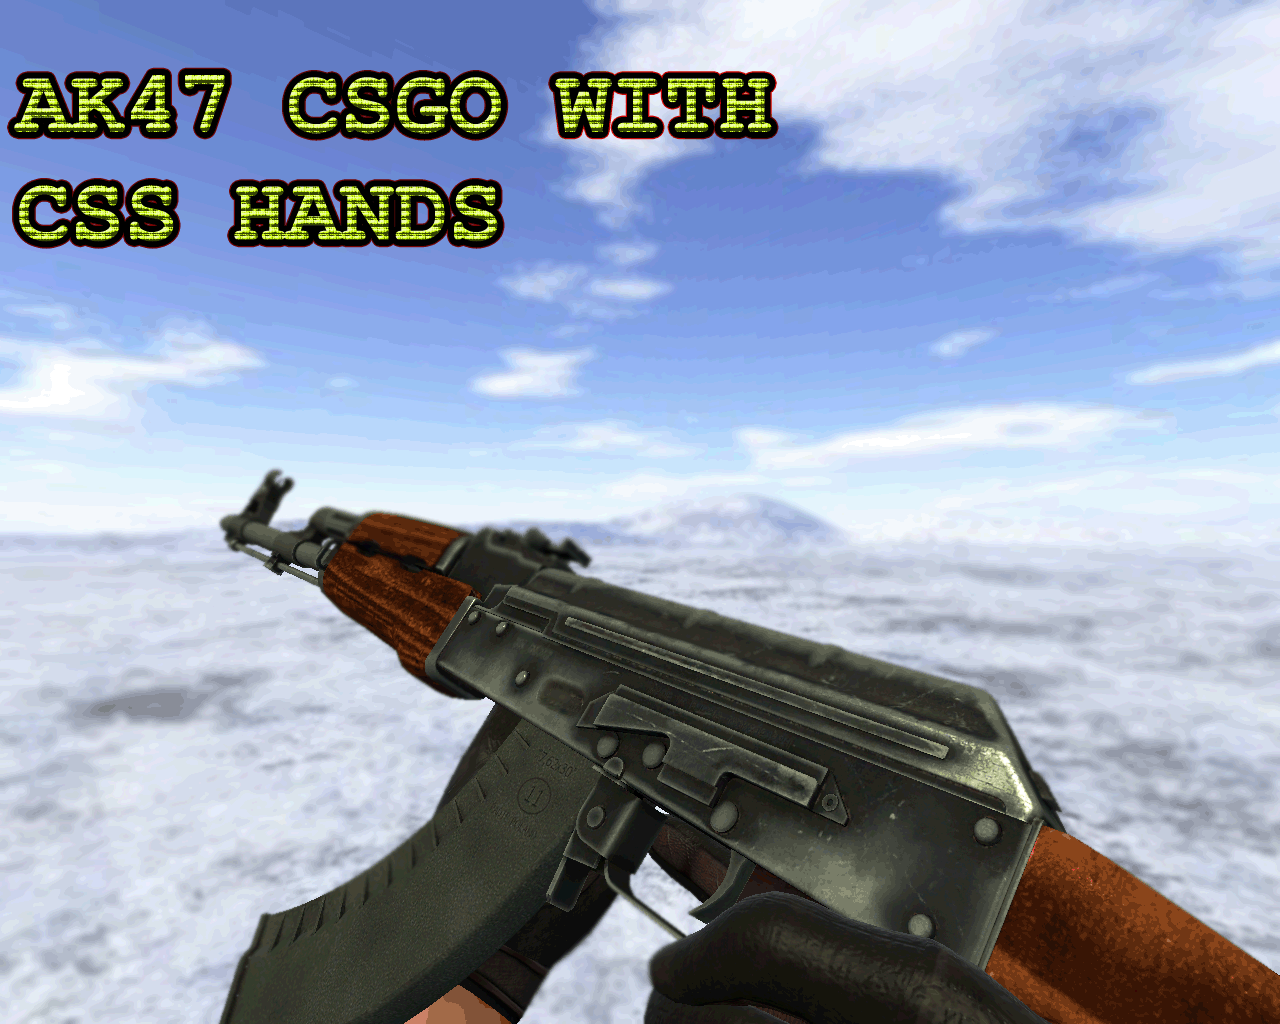 CSGO AK-47 ON CSS HANDS